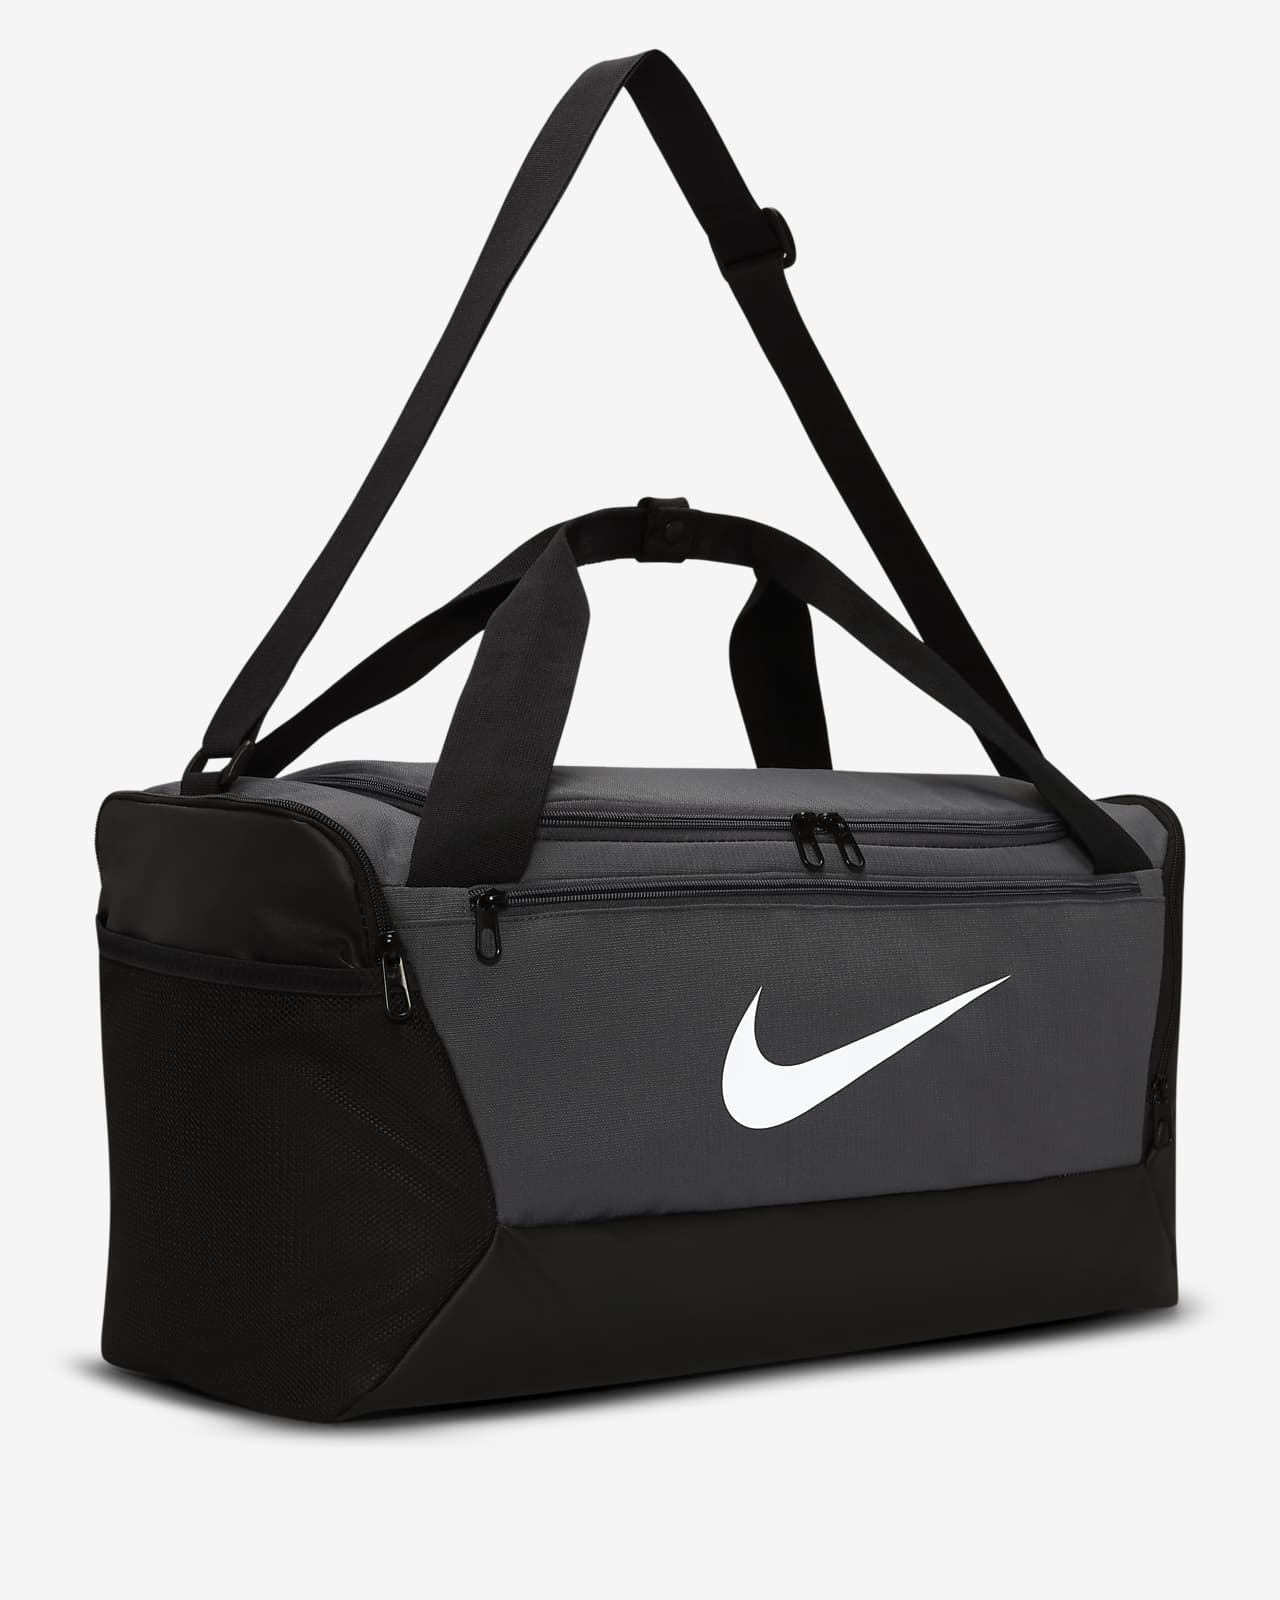 Nike Brasilia Duffel Bag (Small, 41L)